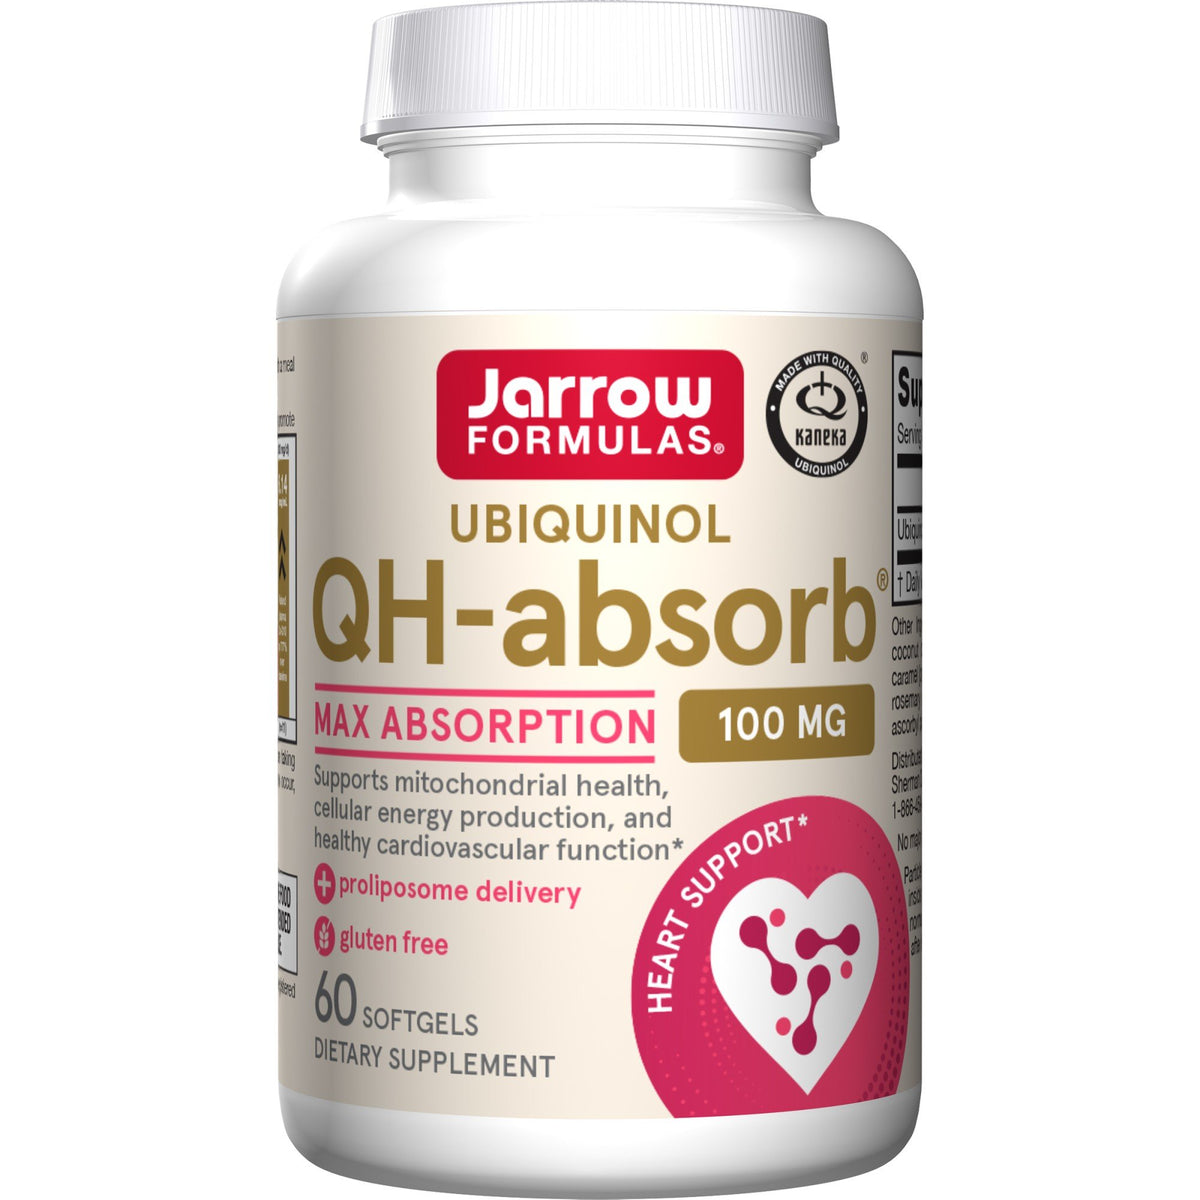 Jarrow Formulas Ubiquinol QH-absorb 100 mg 60 Softgel